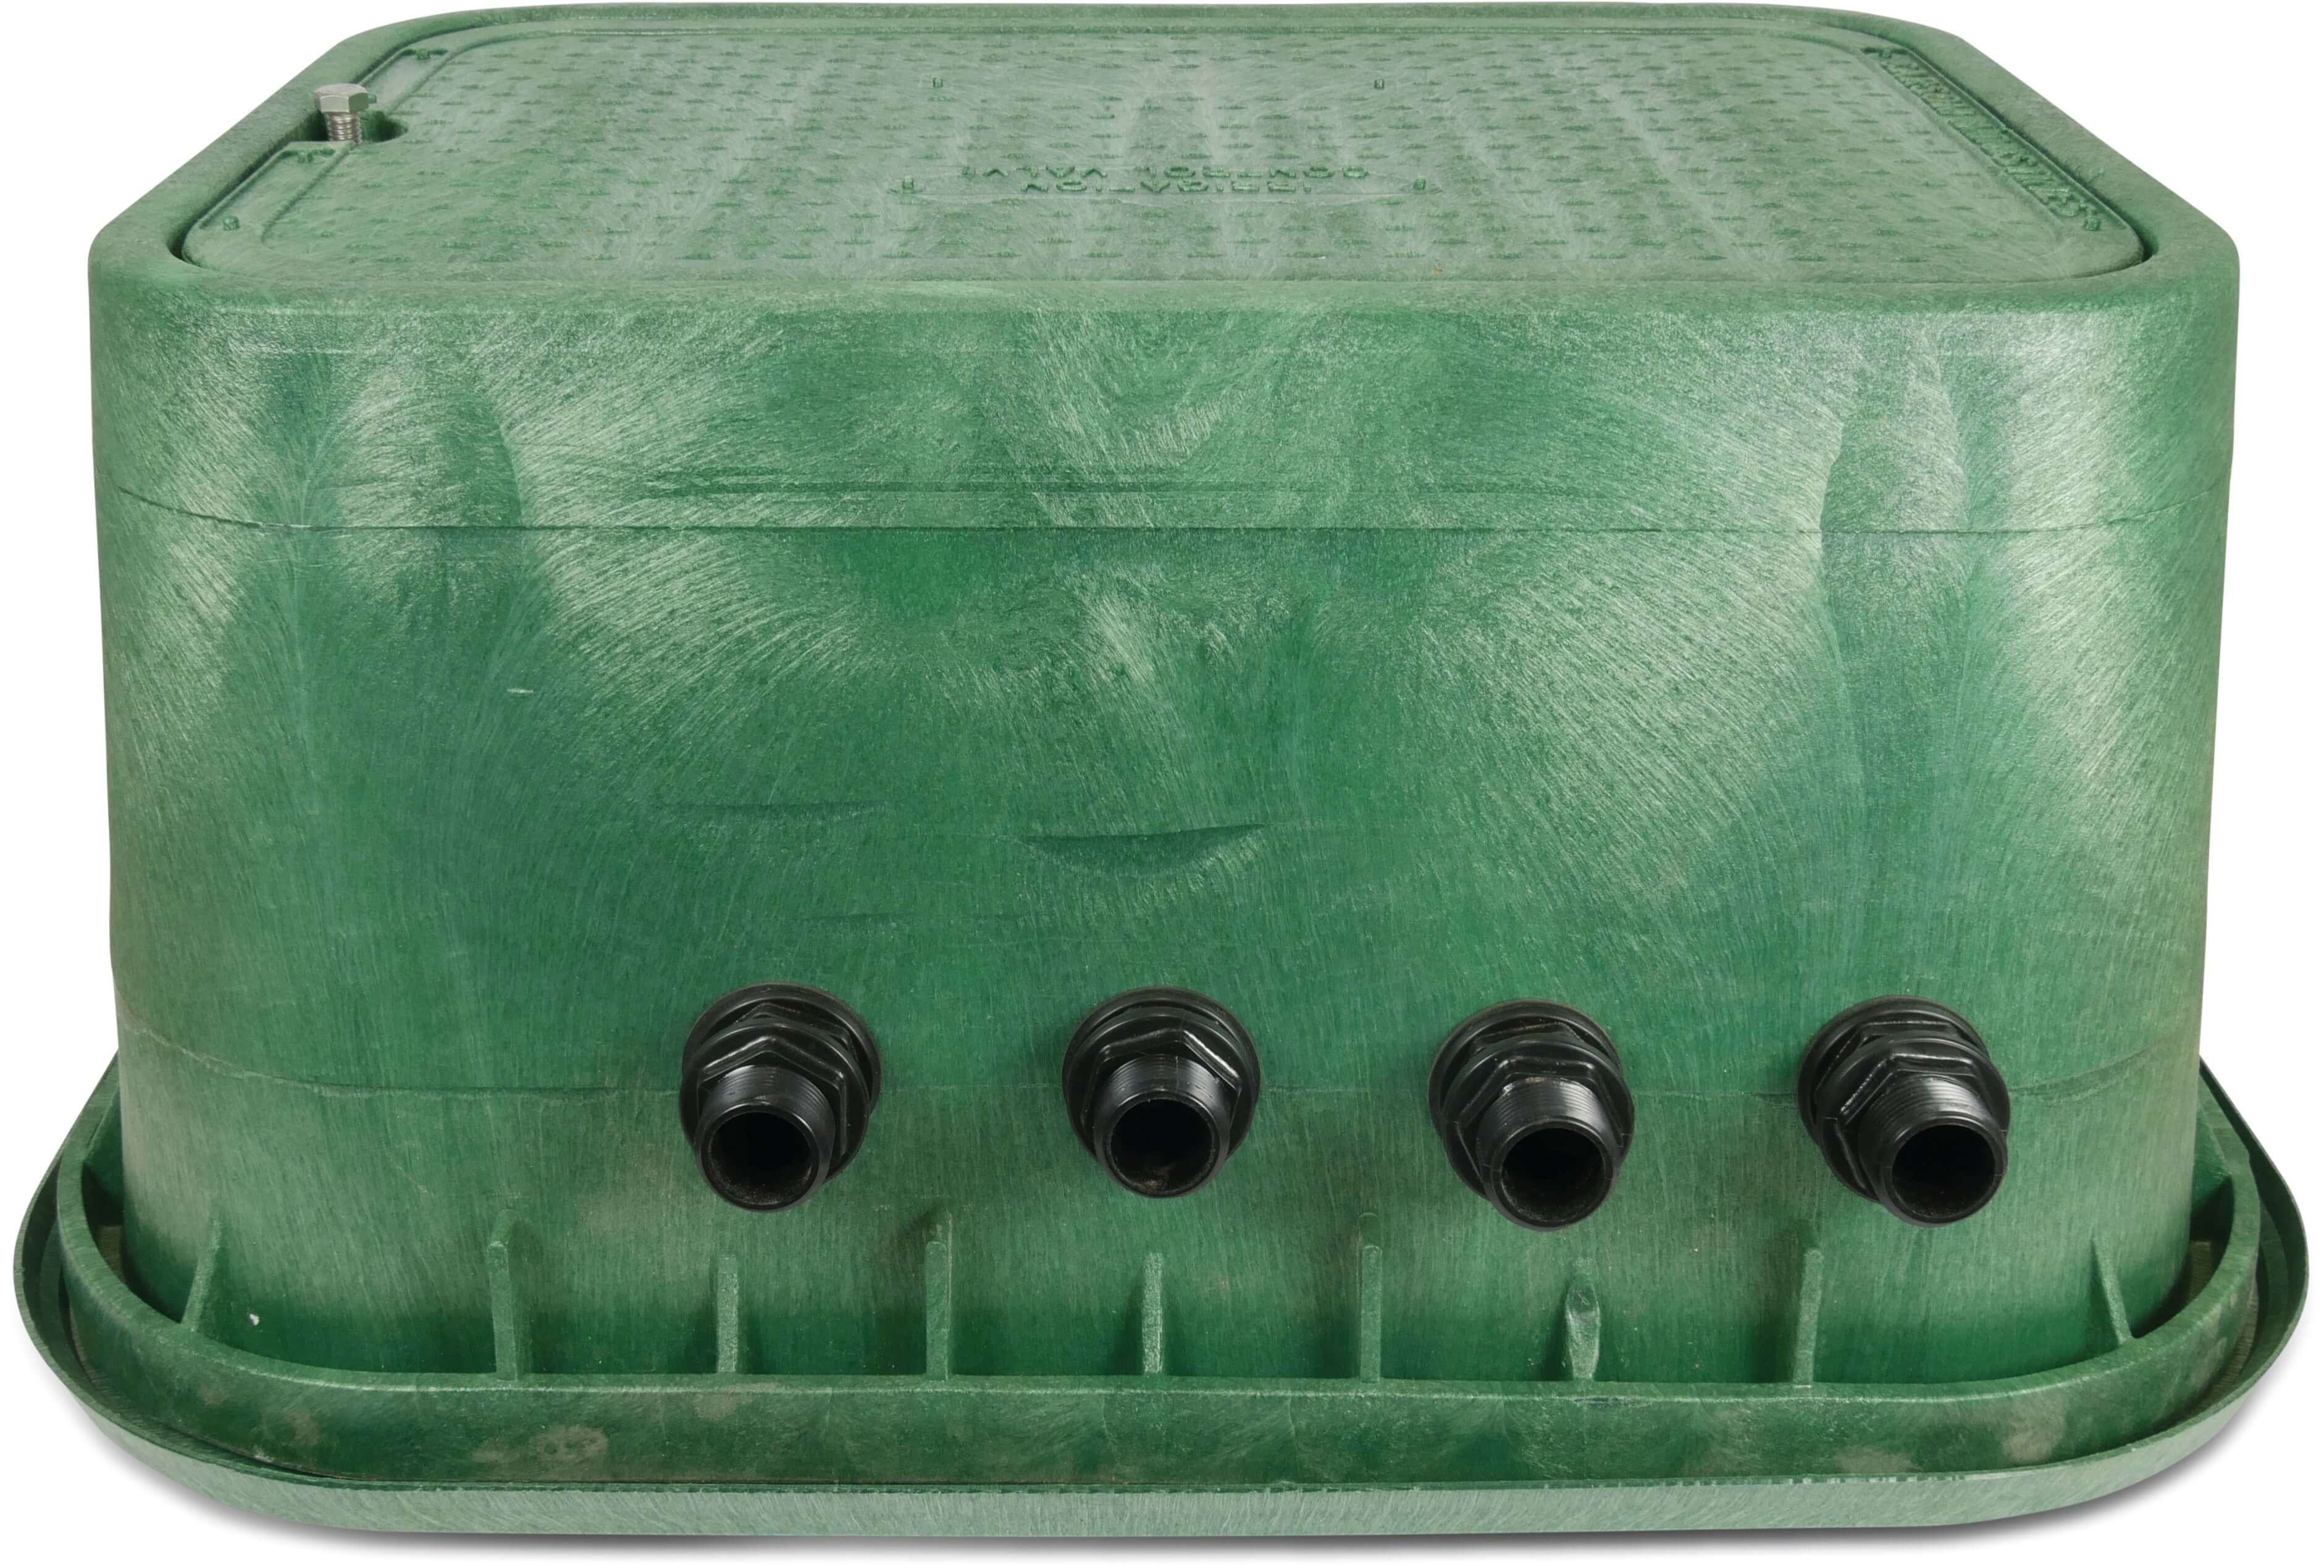 Hunter Assembled valve box HDPE 1" male thread green type 3 valves